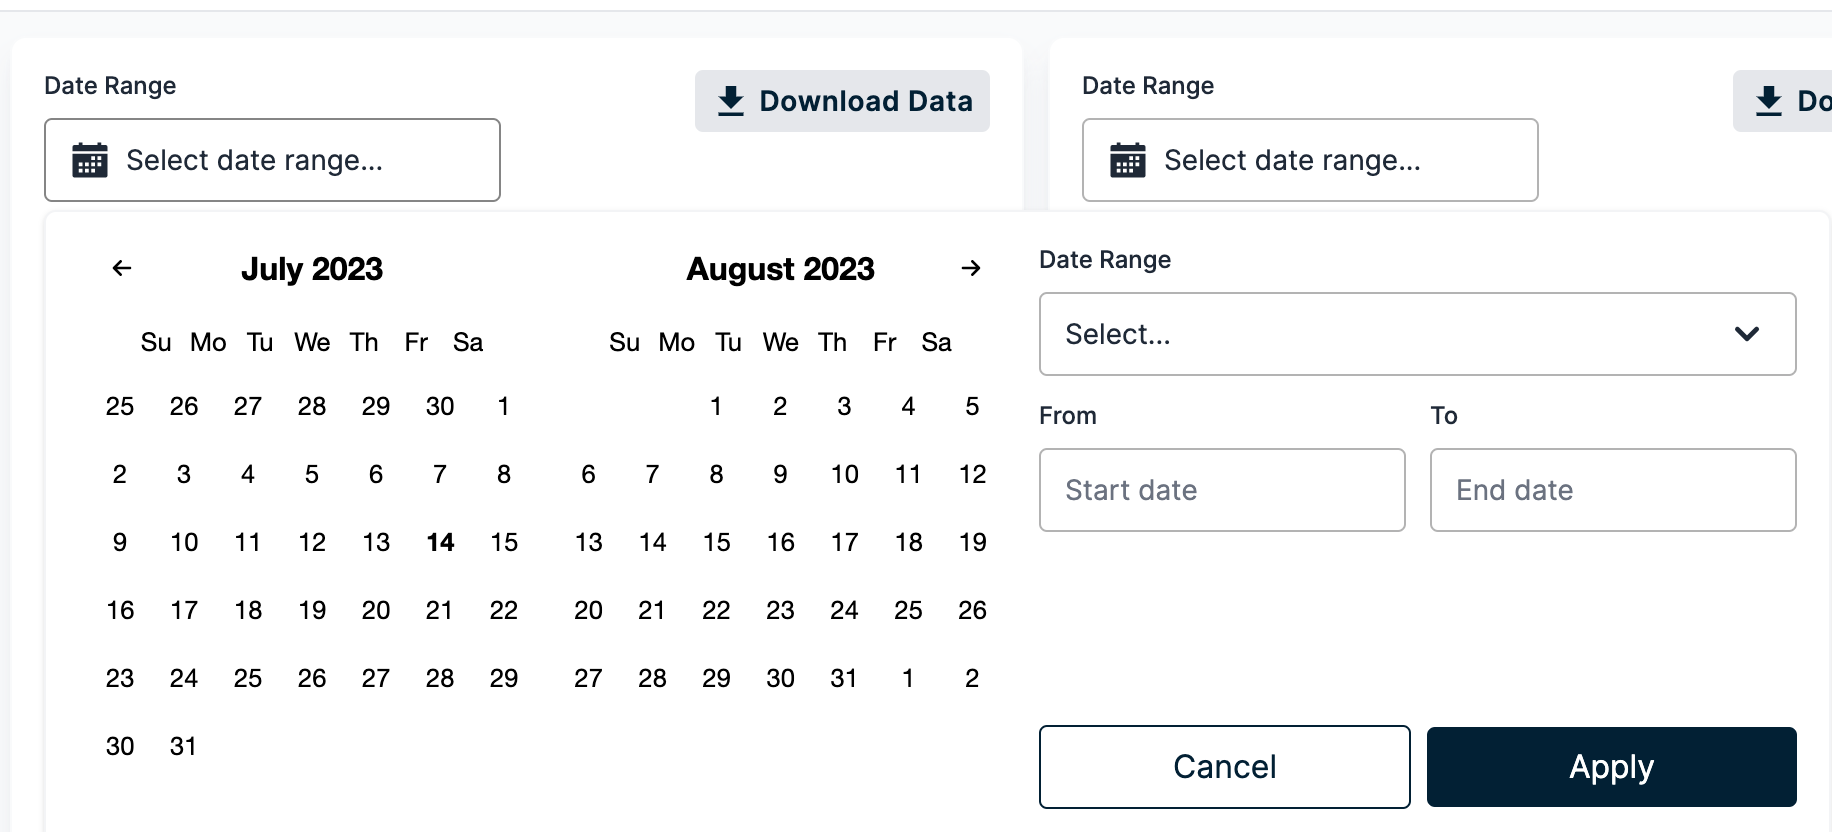 Calendar

Description automatically generated